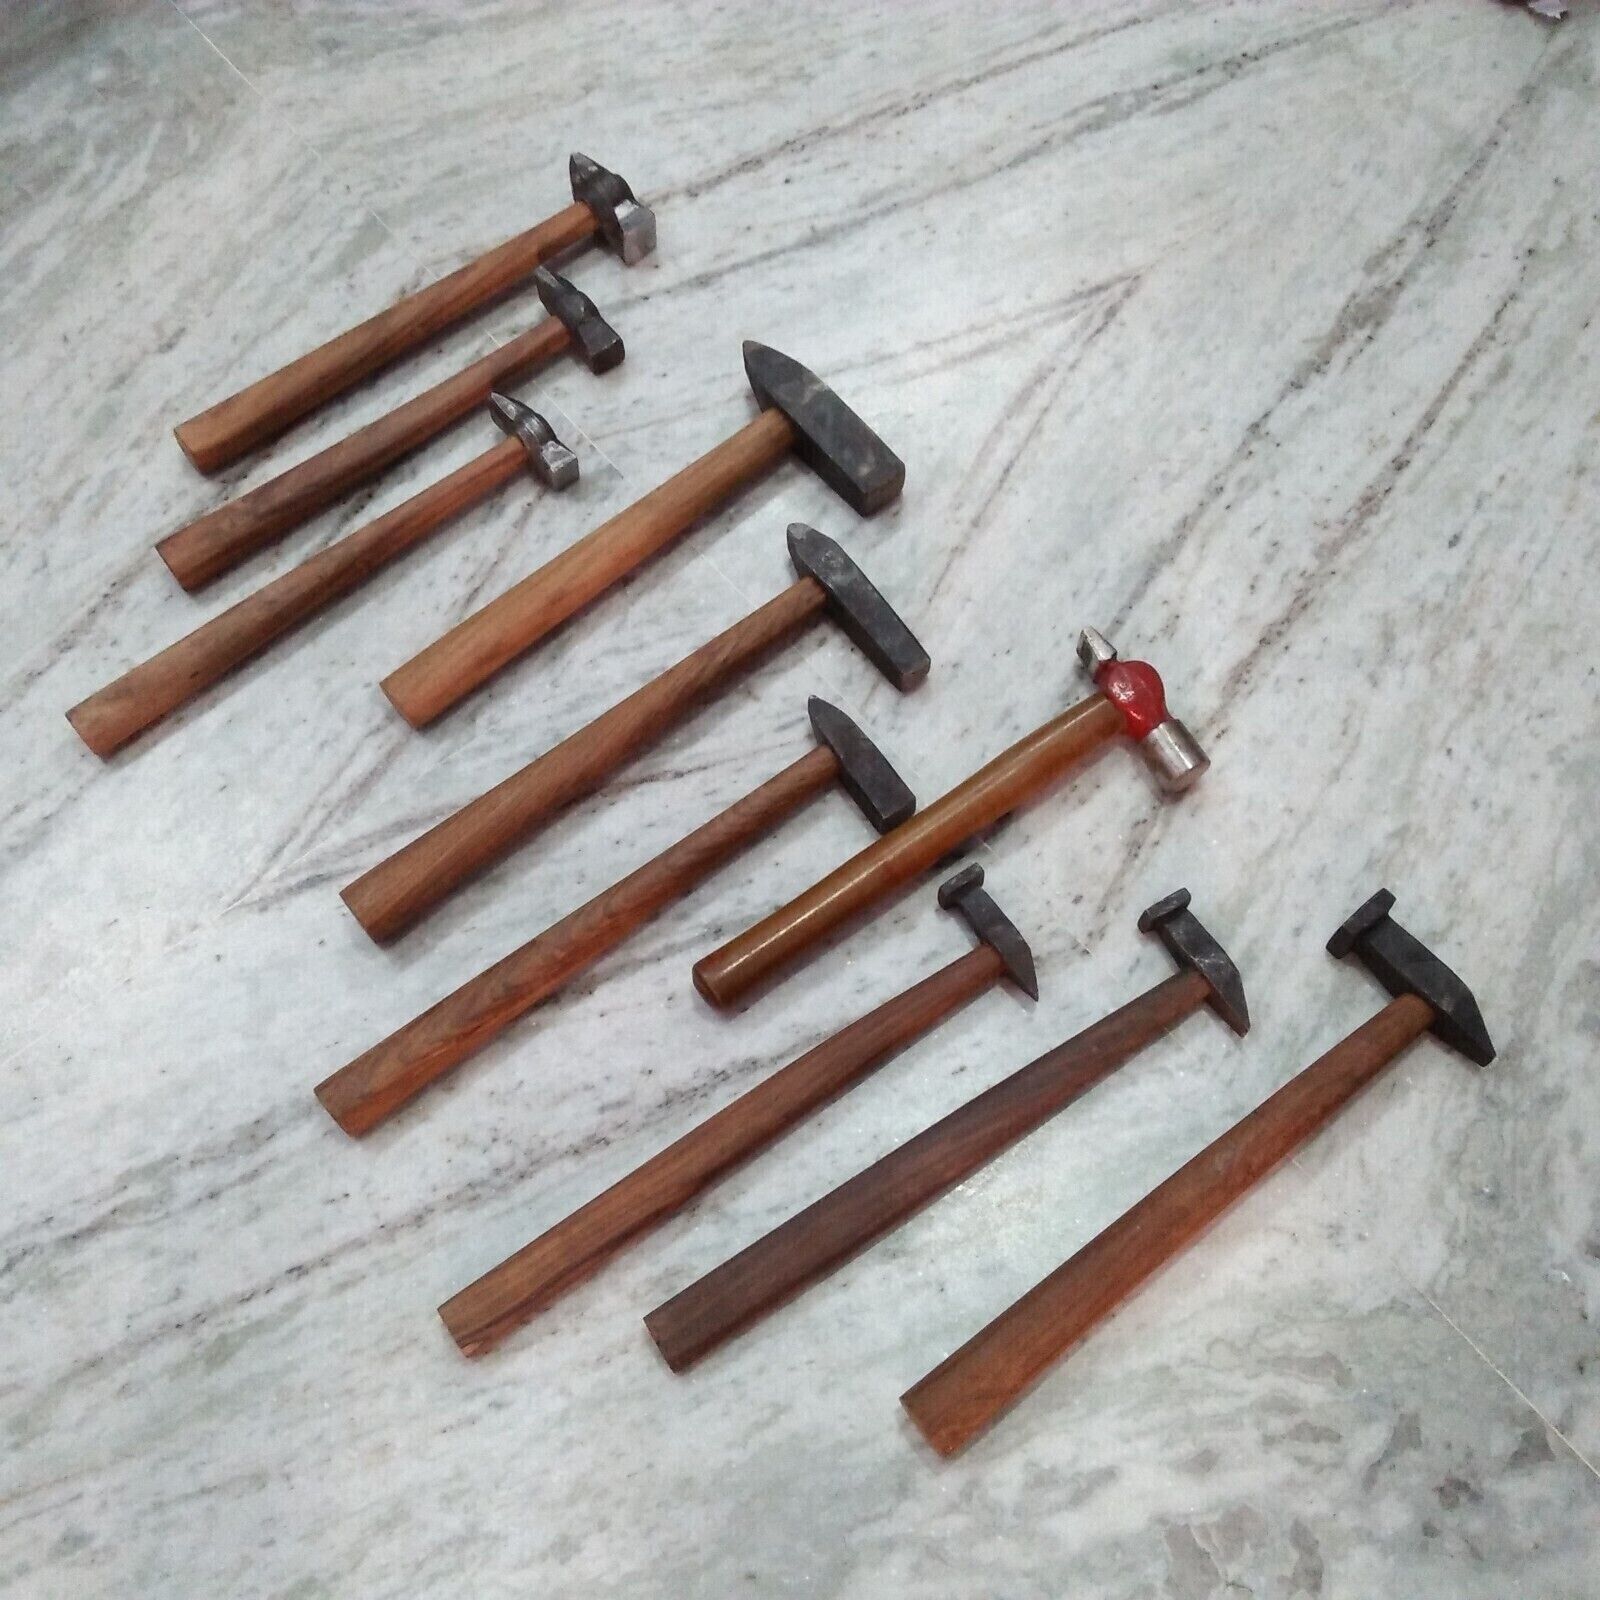 Heavy Iron home use Hammer Blacksmith Wooden useable item SET OF 10 hammer